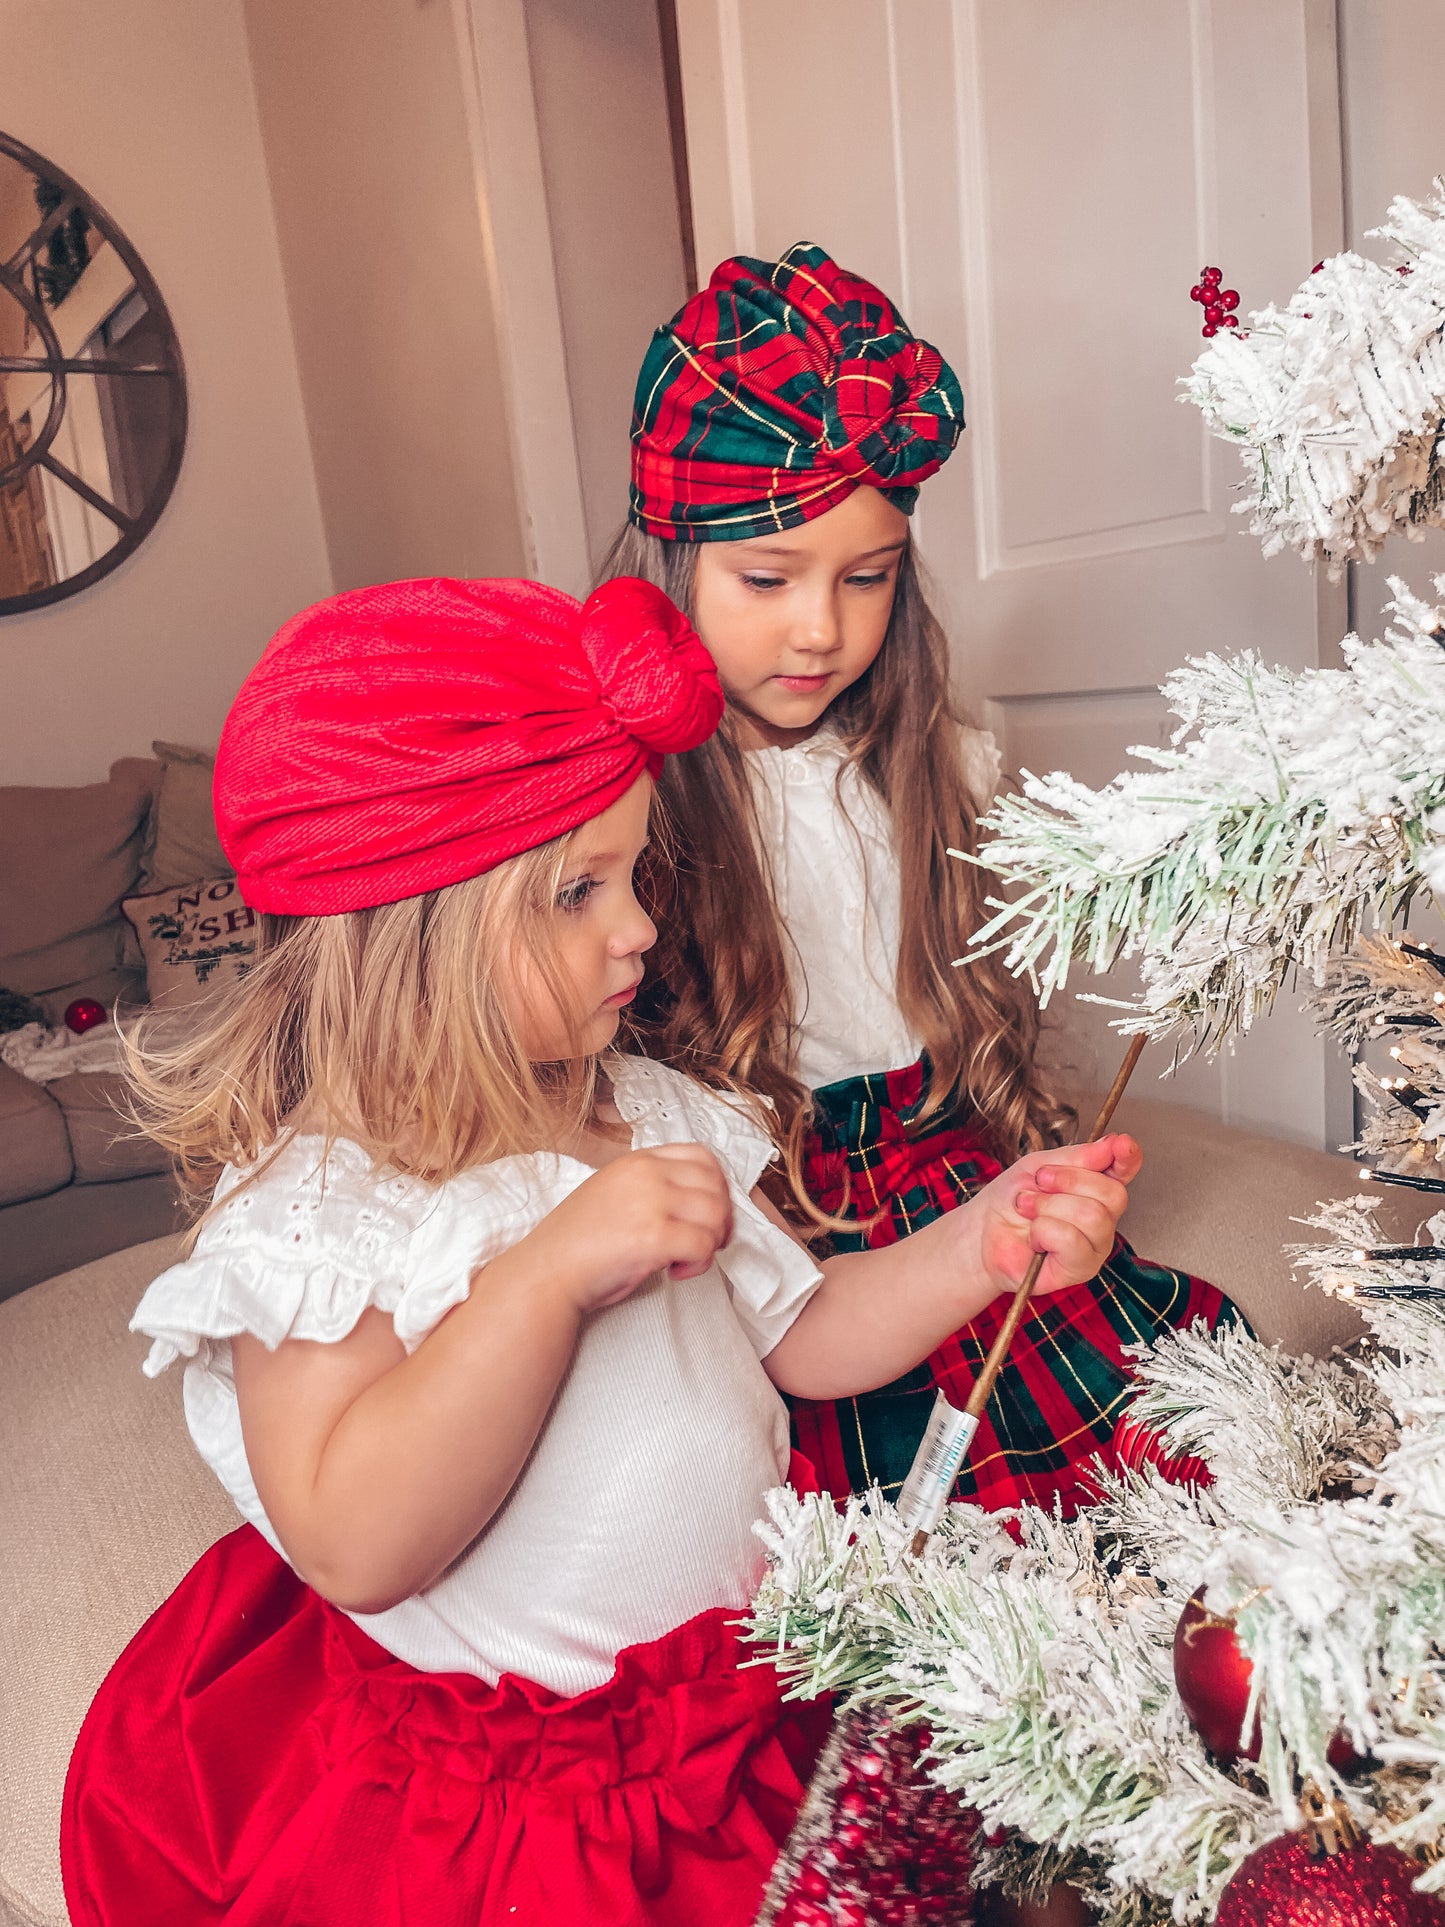 Priya and Piper Christmas turbans